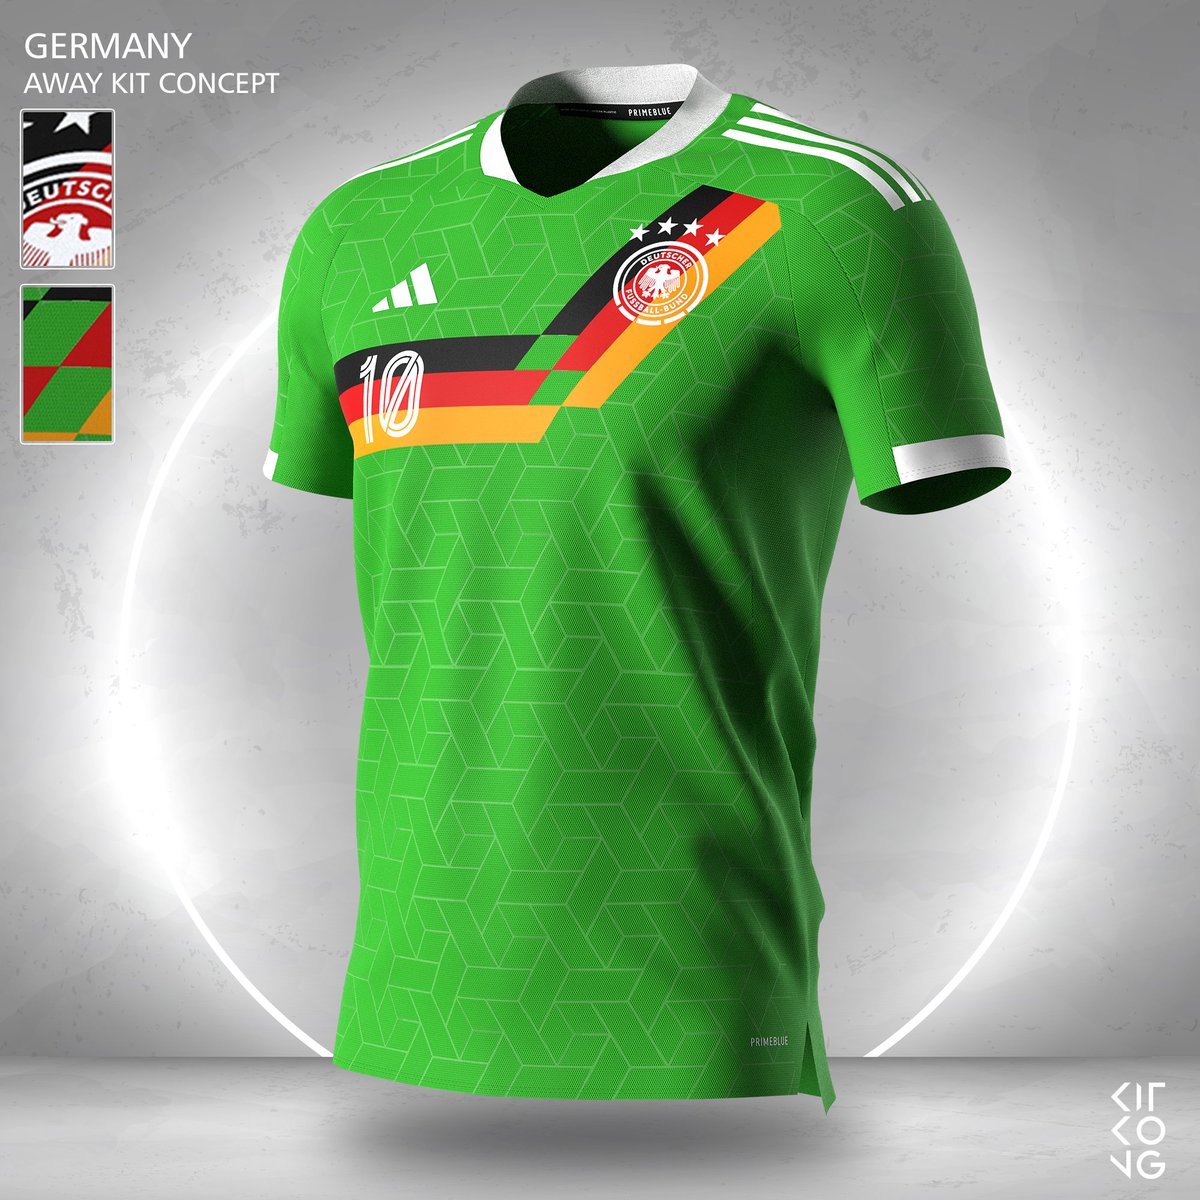 #WC2022 

Away kit concept for @DFB_Team 🇩🇪

@DFB_Team_EN @DFBTeamUS @DimaFCBx @Adiculer08 @freekickerz @Podolski10 @GGFN_ @talkingfussball @iMiaSanMia_en @The_Kitsman @Footy_Headlines 
 
#Qatar2022 #jersey #design #football #footballkits #footballdesign #Germany #GER #Fussball